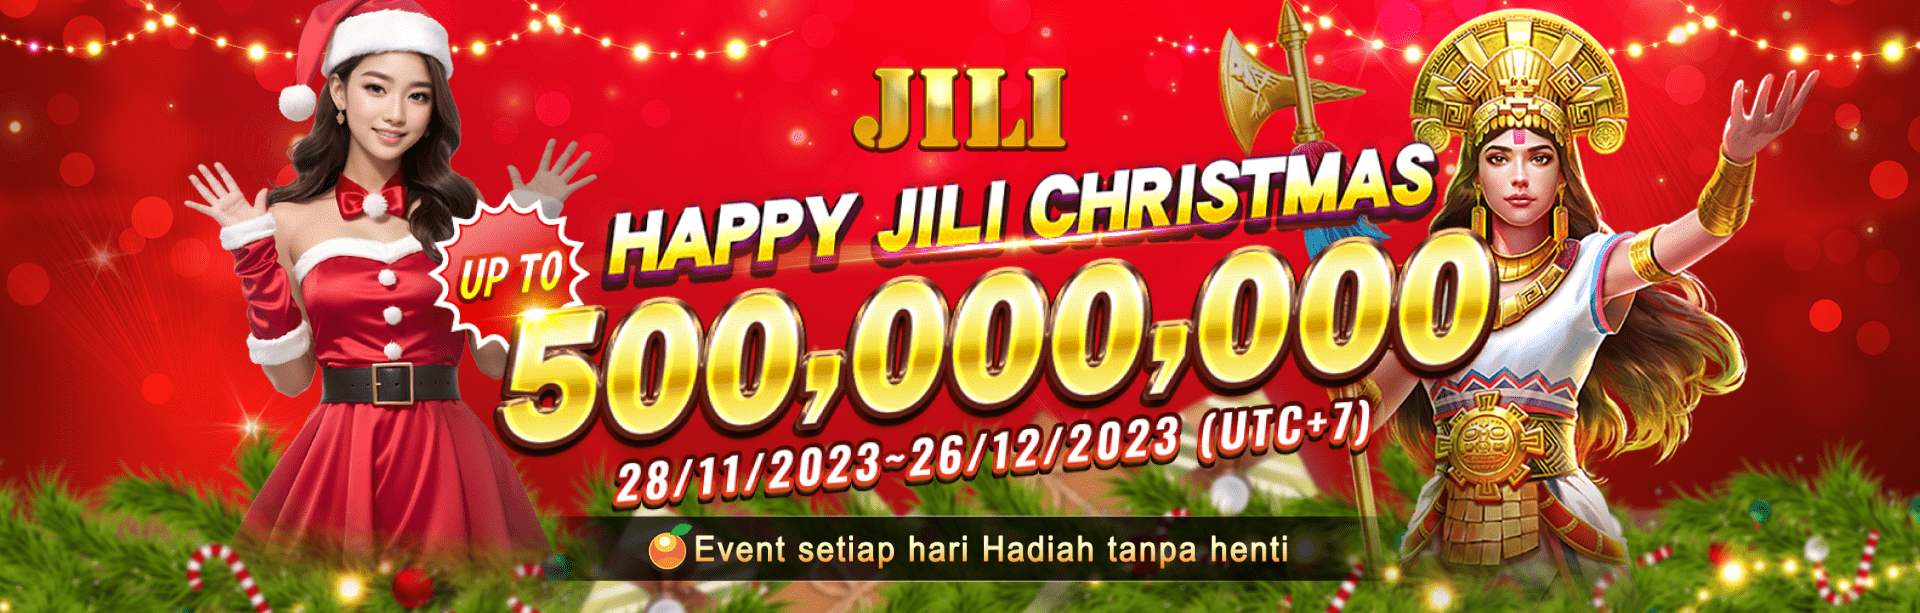 HAPPY JILI CHRISTMAS EVENT